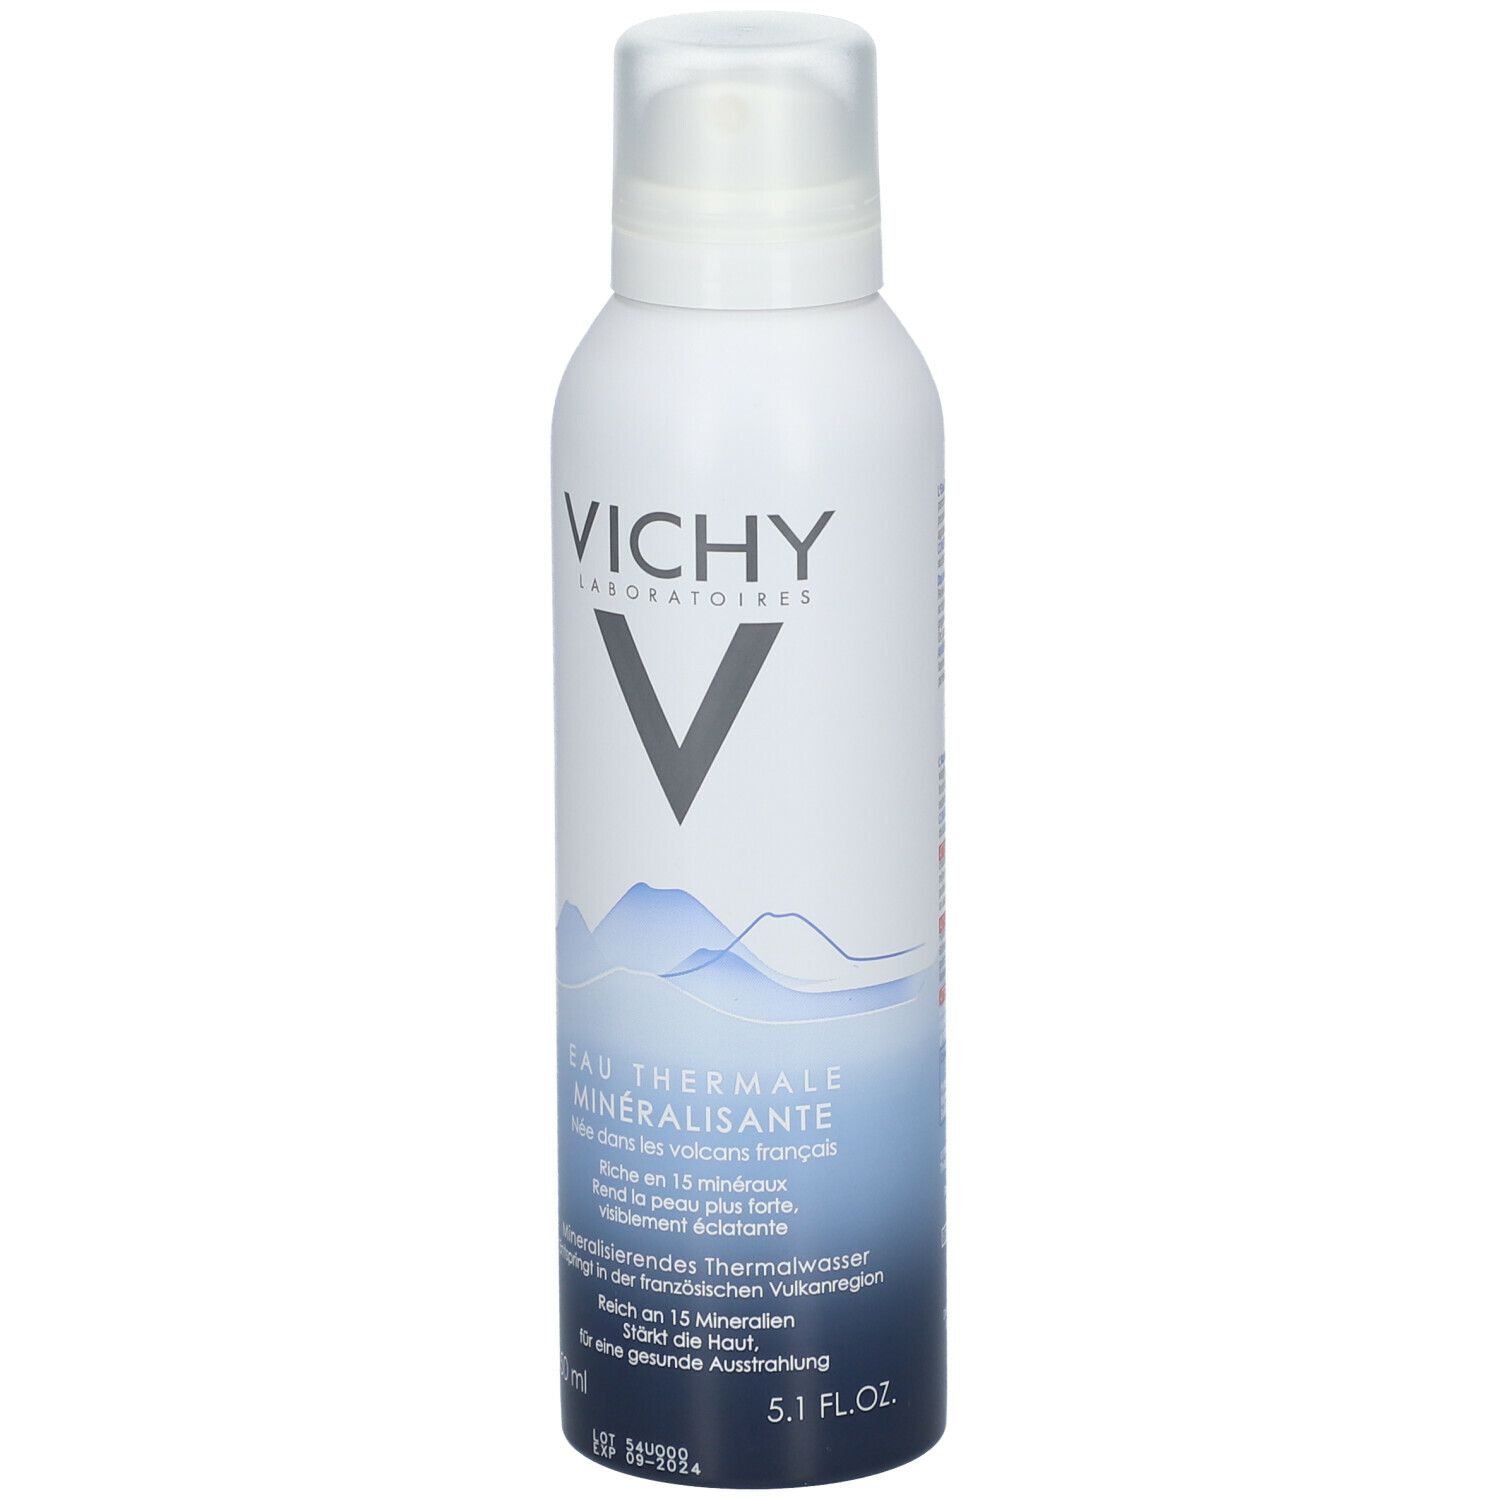 VICHY Eau Thermale Minéralisante de Vichy 150 ml